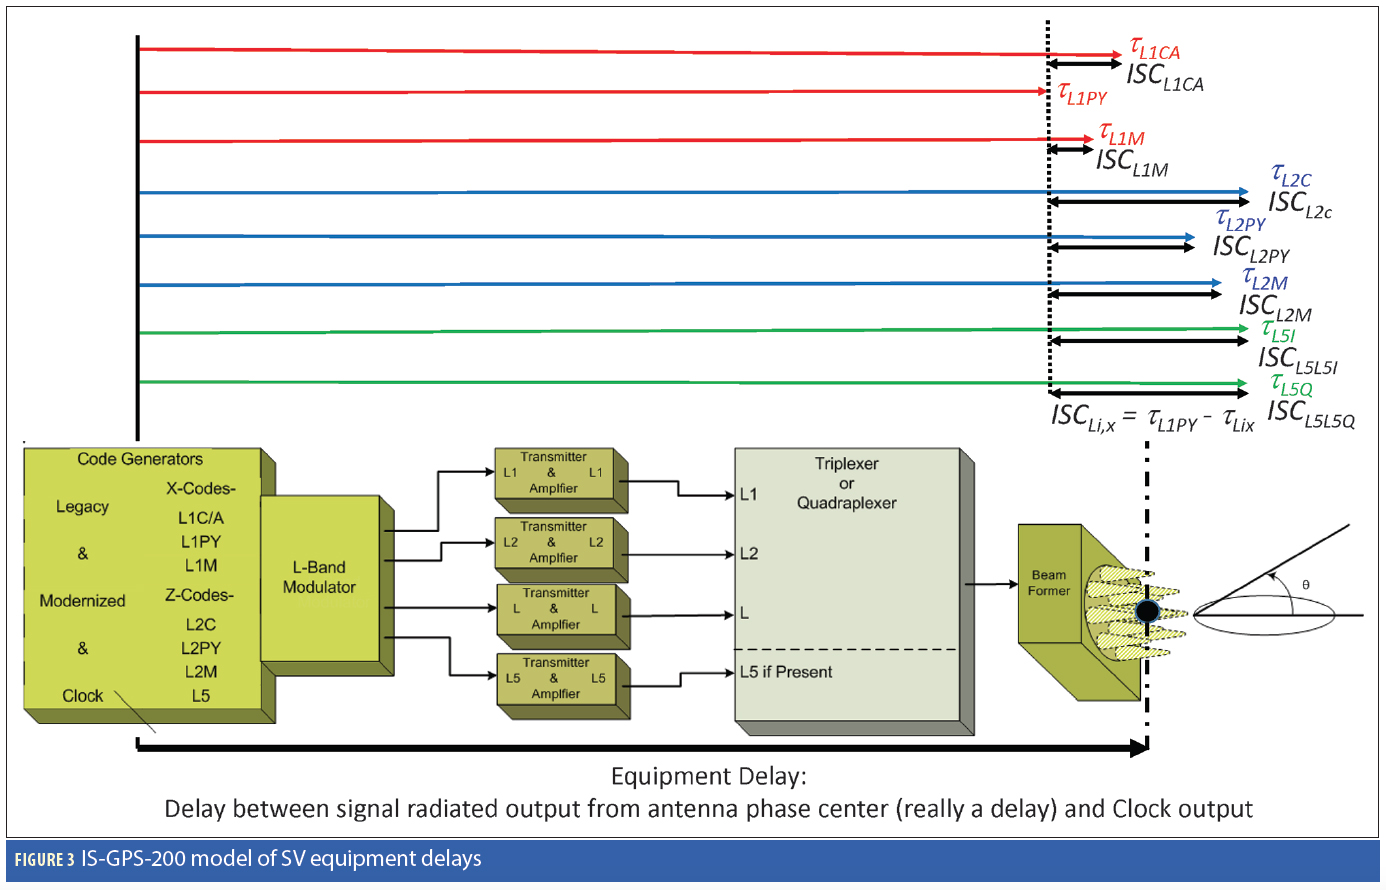 Figure 3: Inter-Signal Correction Sensitivity Analysis